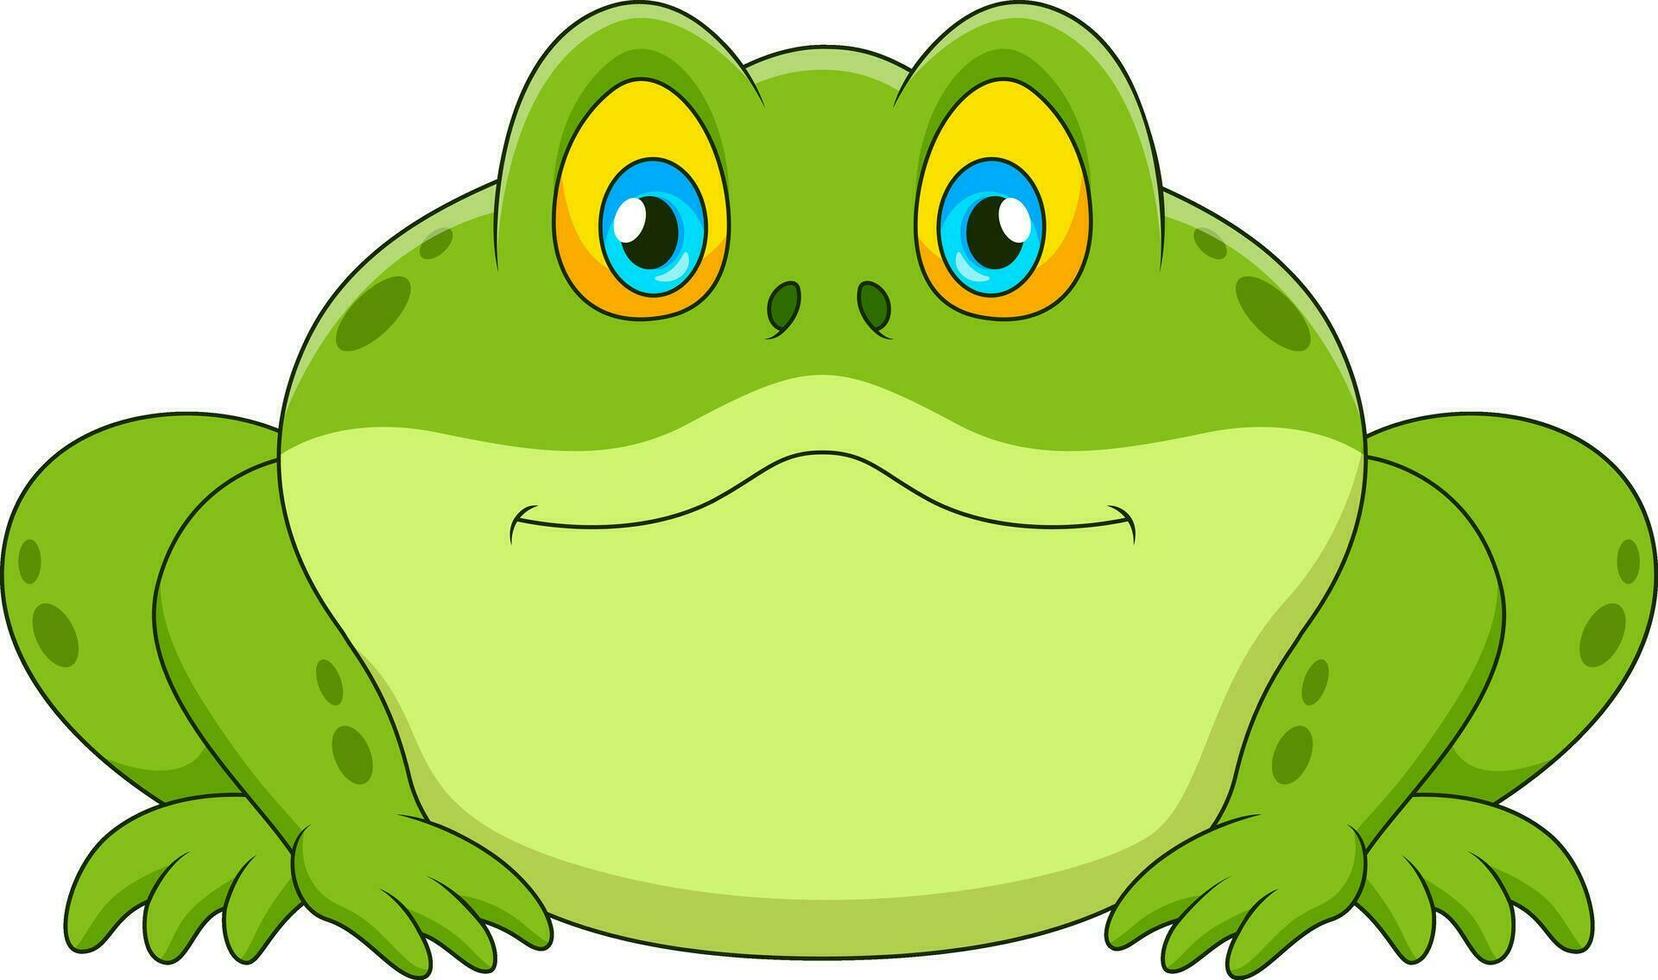 Cute frog cartoon smiling. Vector illustration